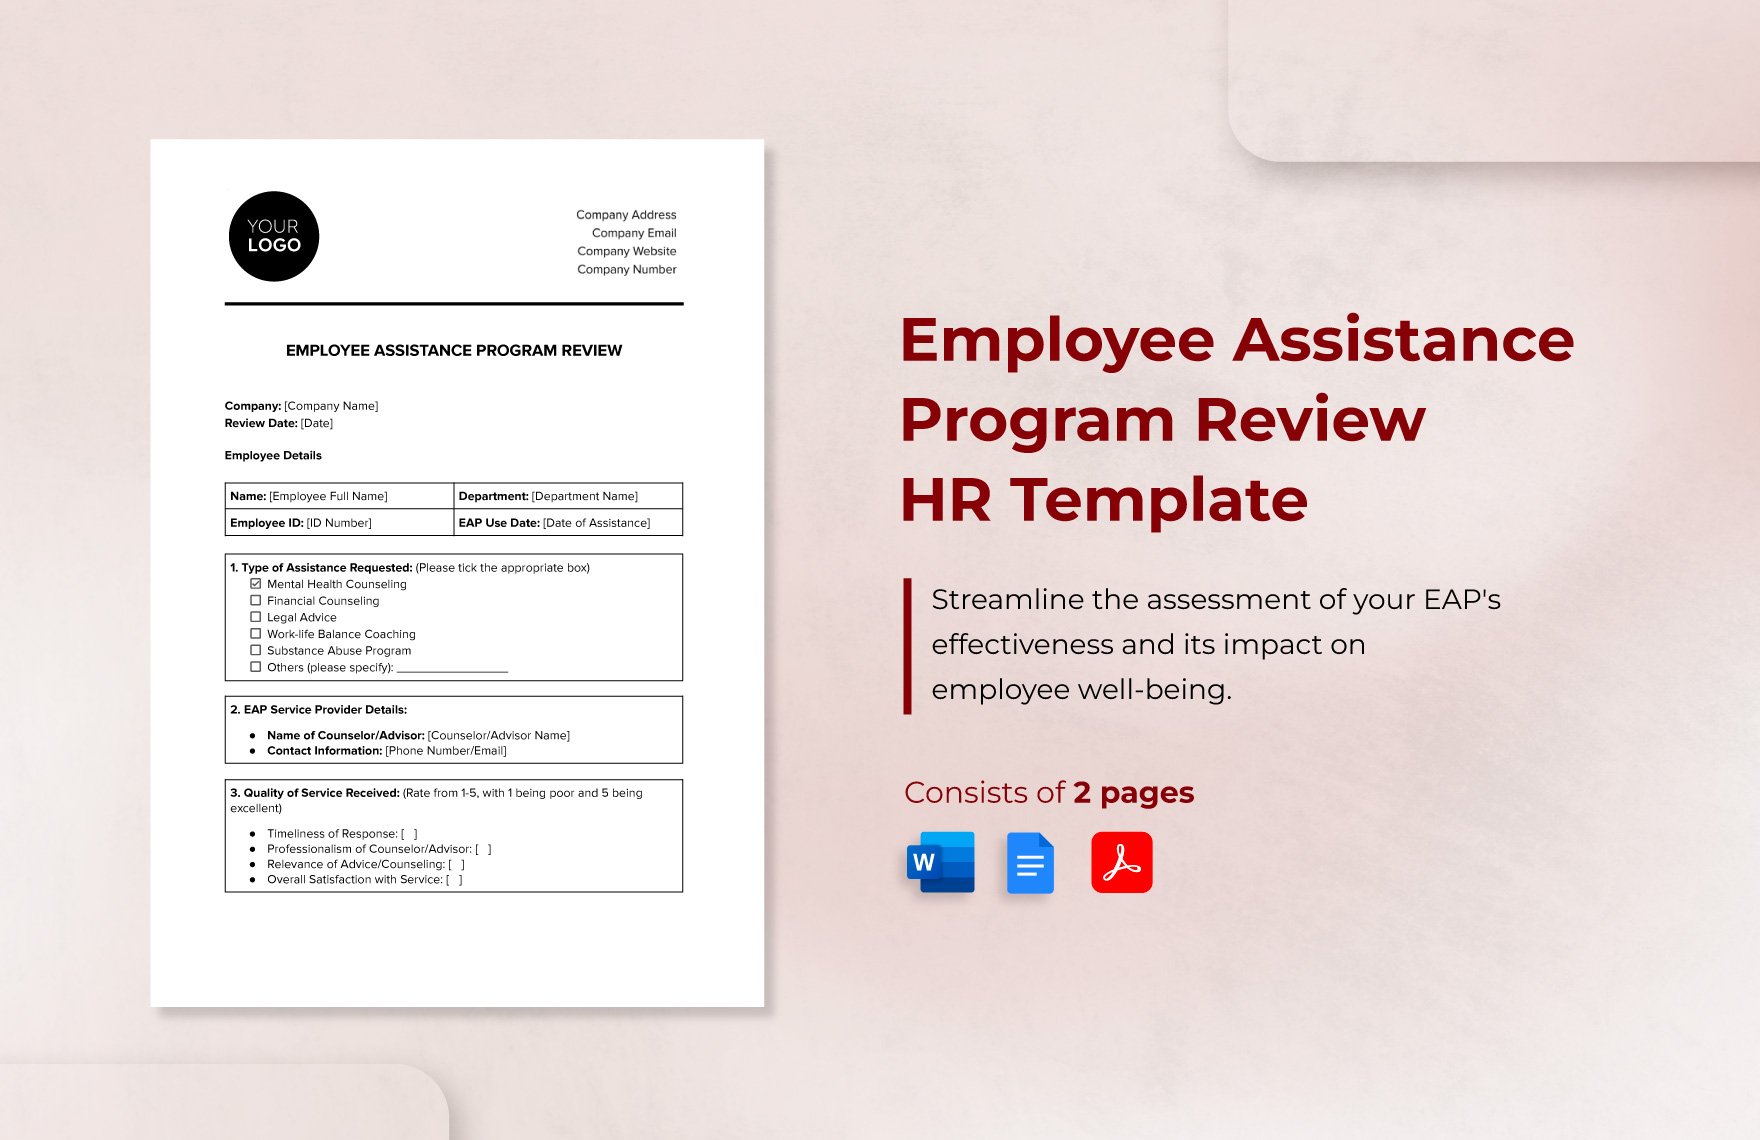 Employee Assistance Program Review HR Template